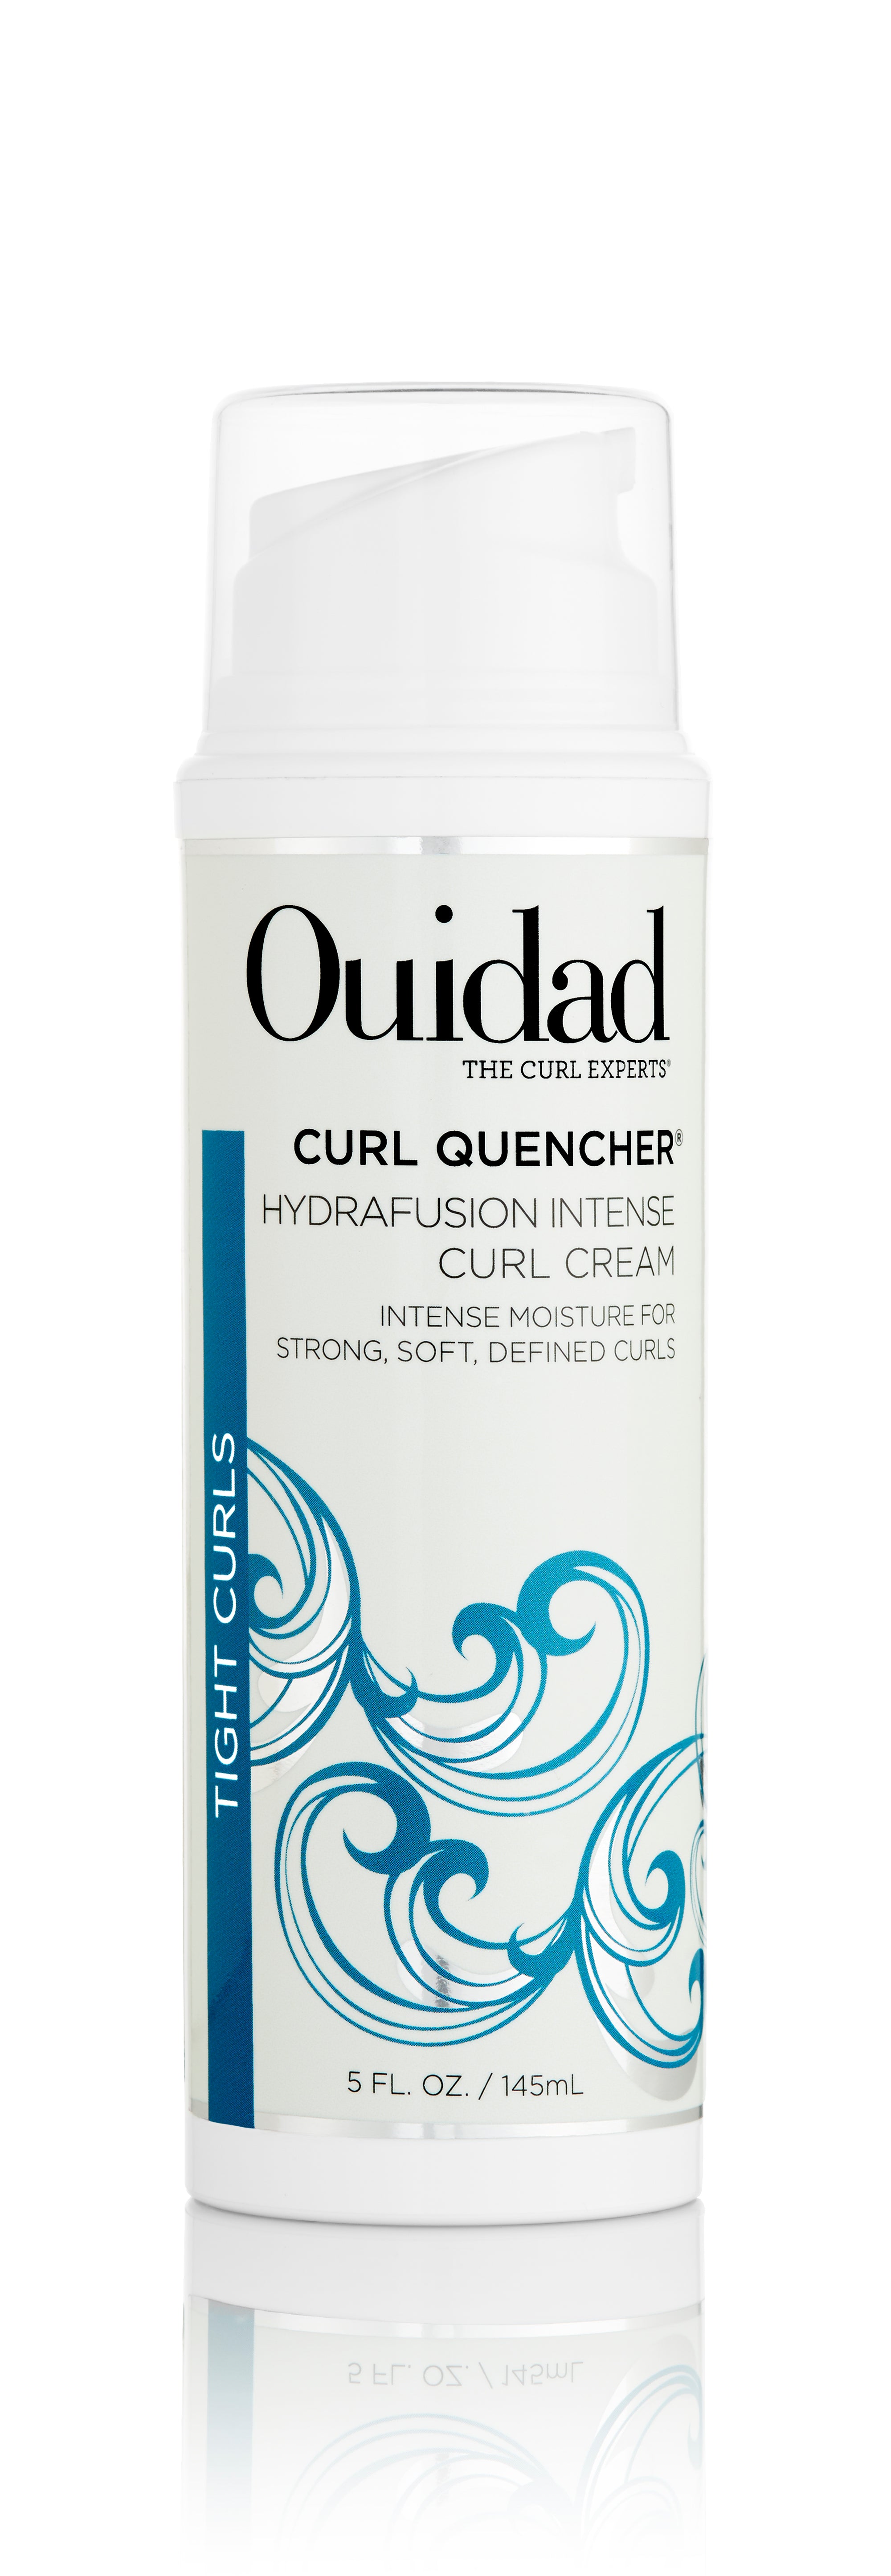 Curl Quencher Hydrafusion Intense Curl Cream